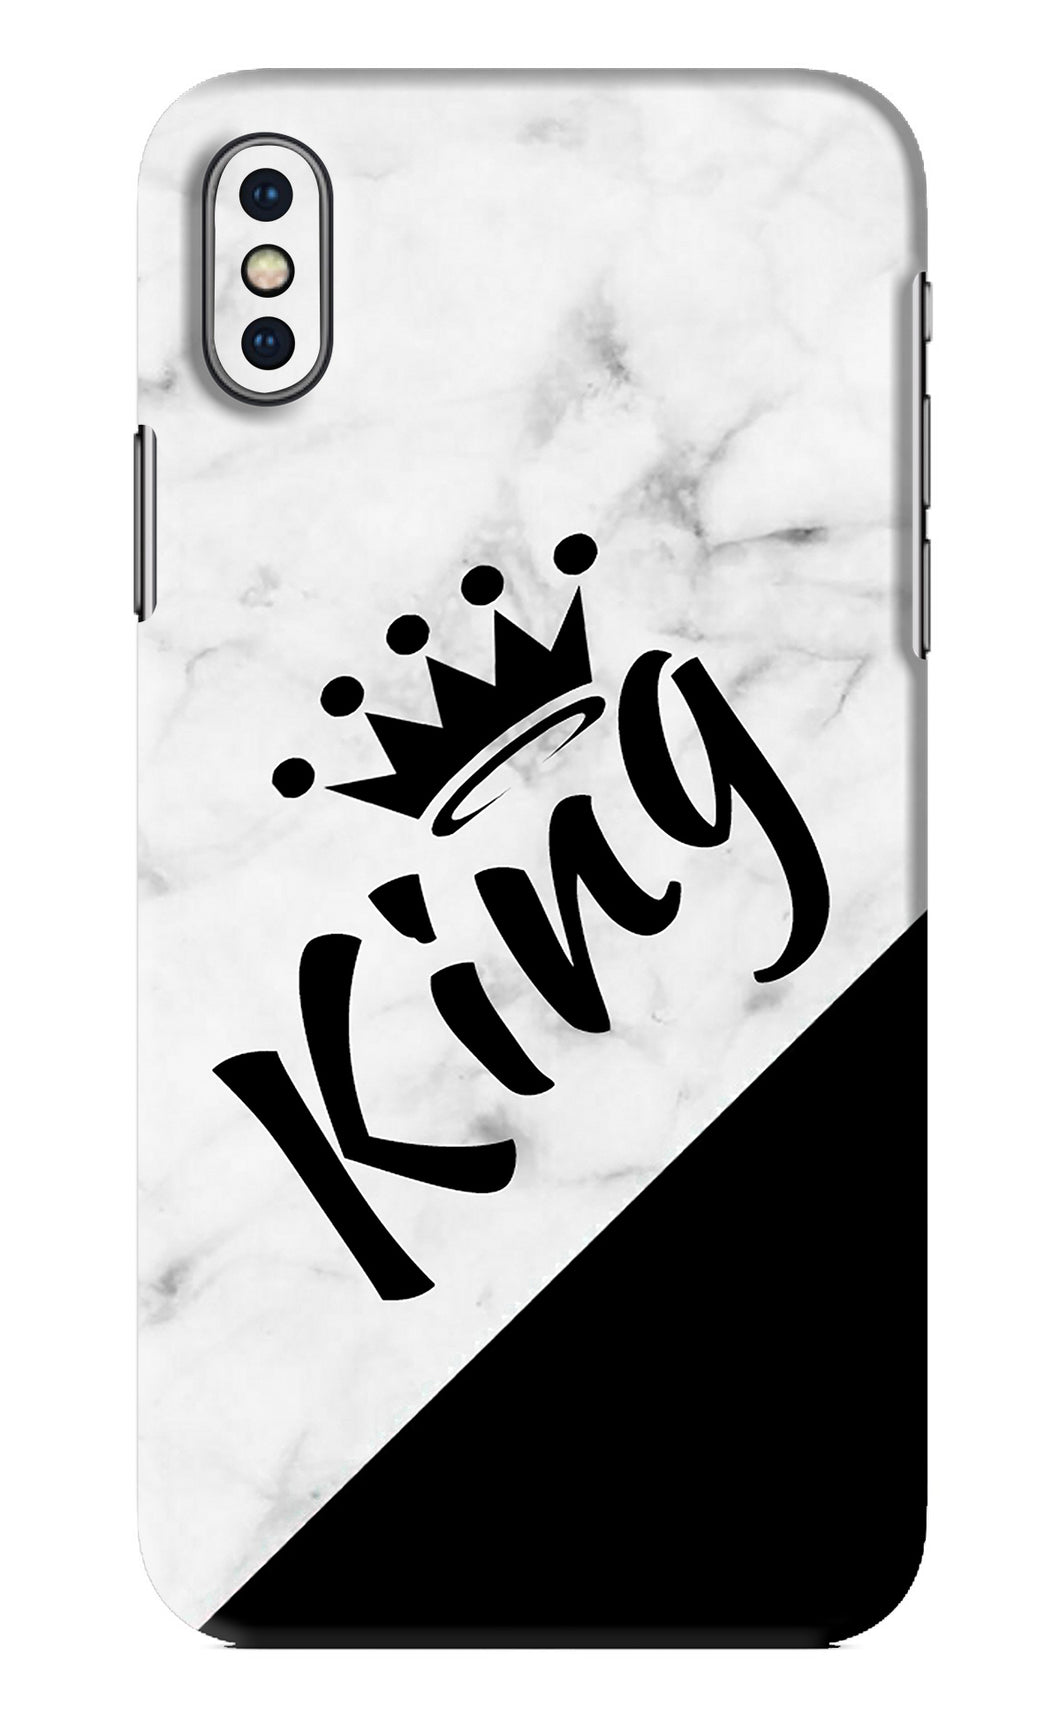 King iPhone XS Back Skin Wrap